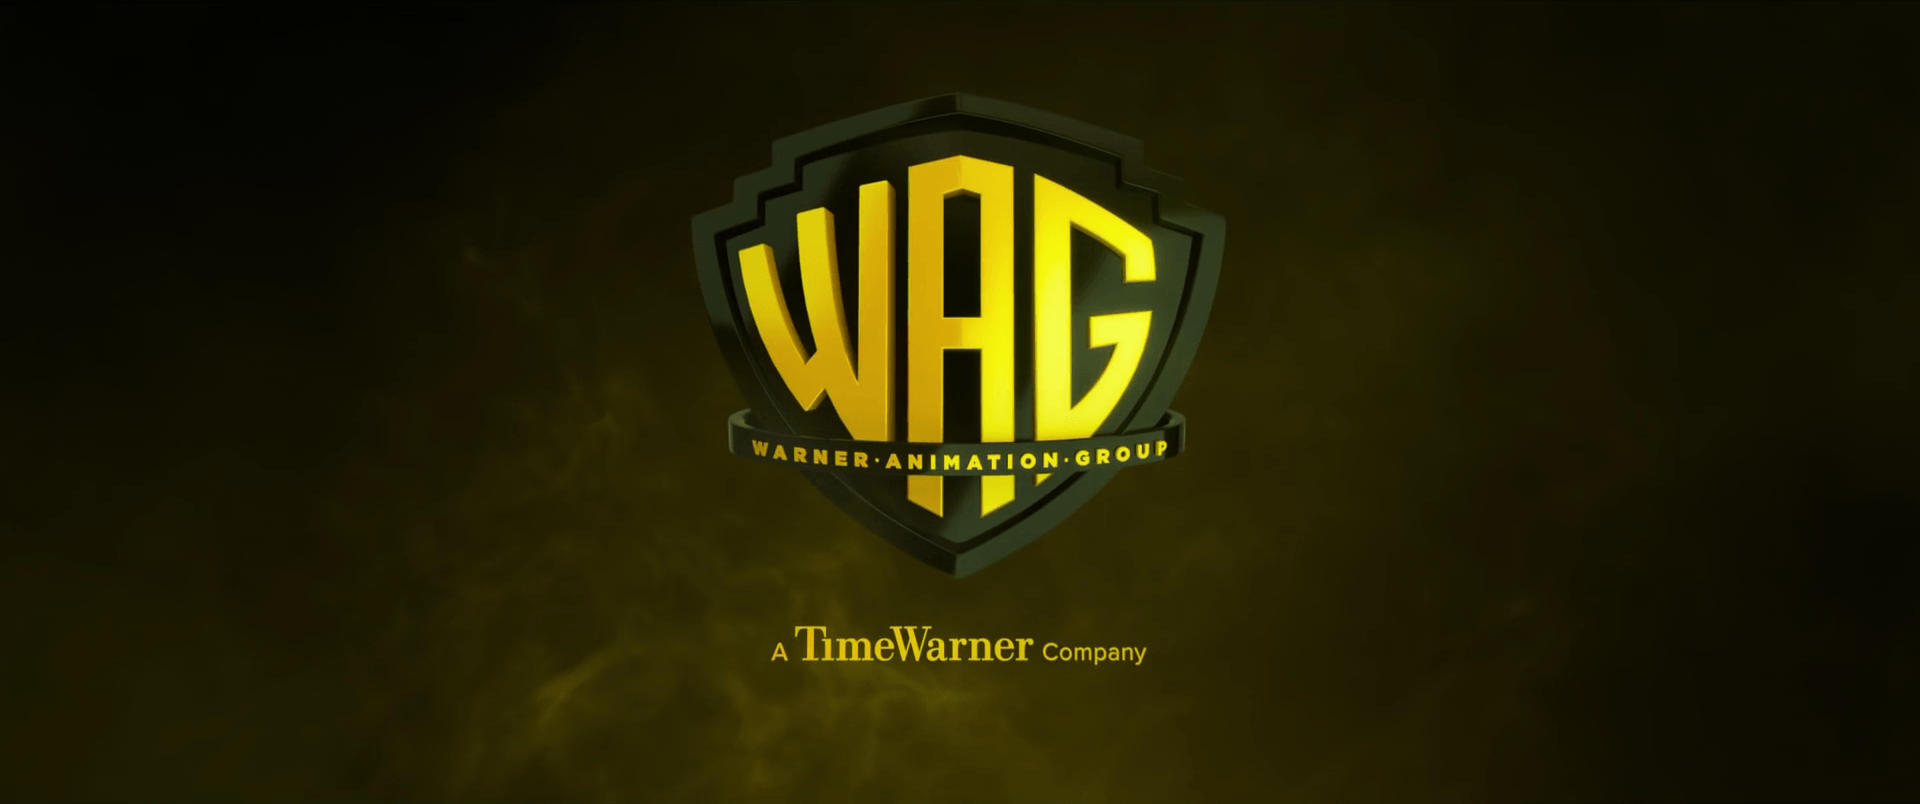 Warner Animation Group Logo - Warner animation group lego batman movie logo.png. Idea